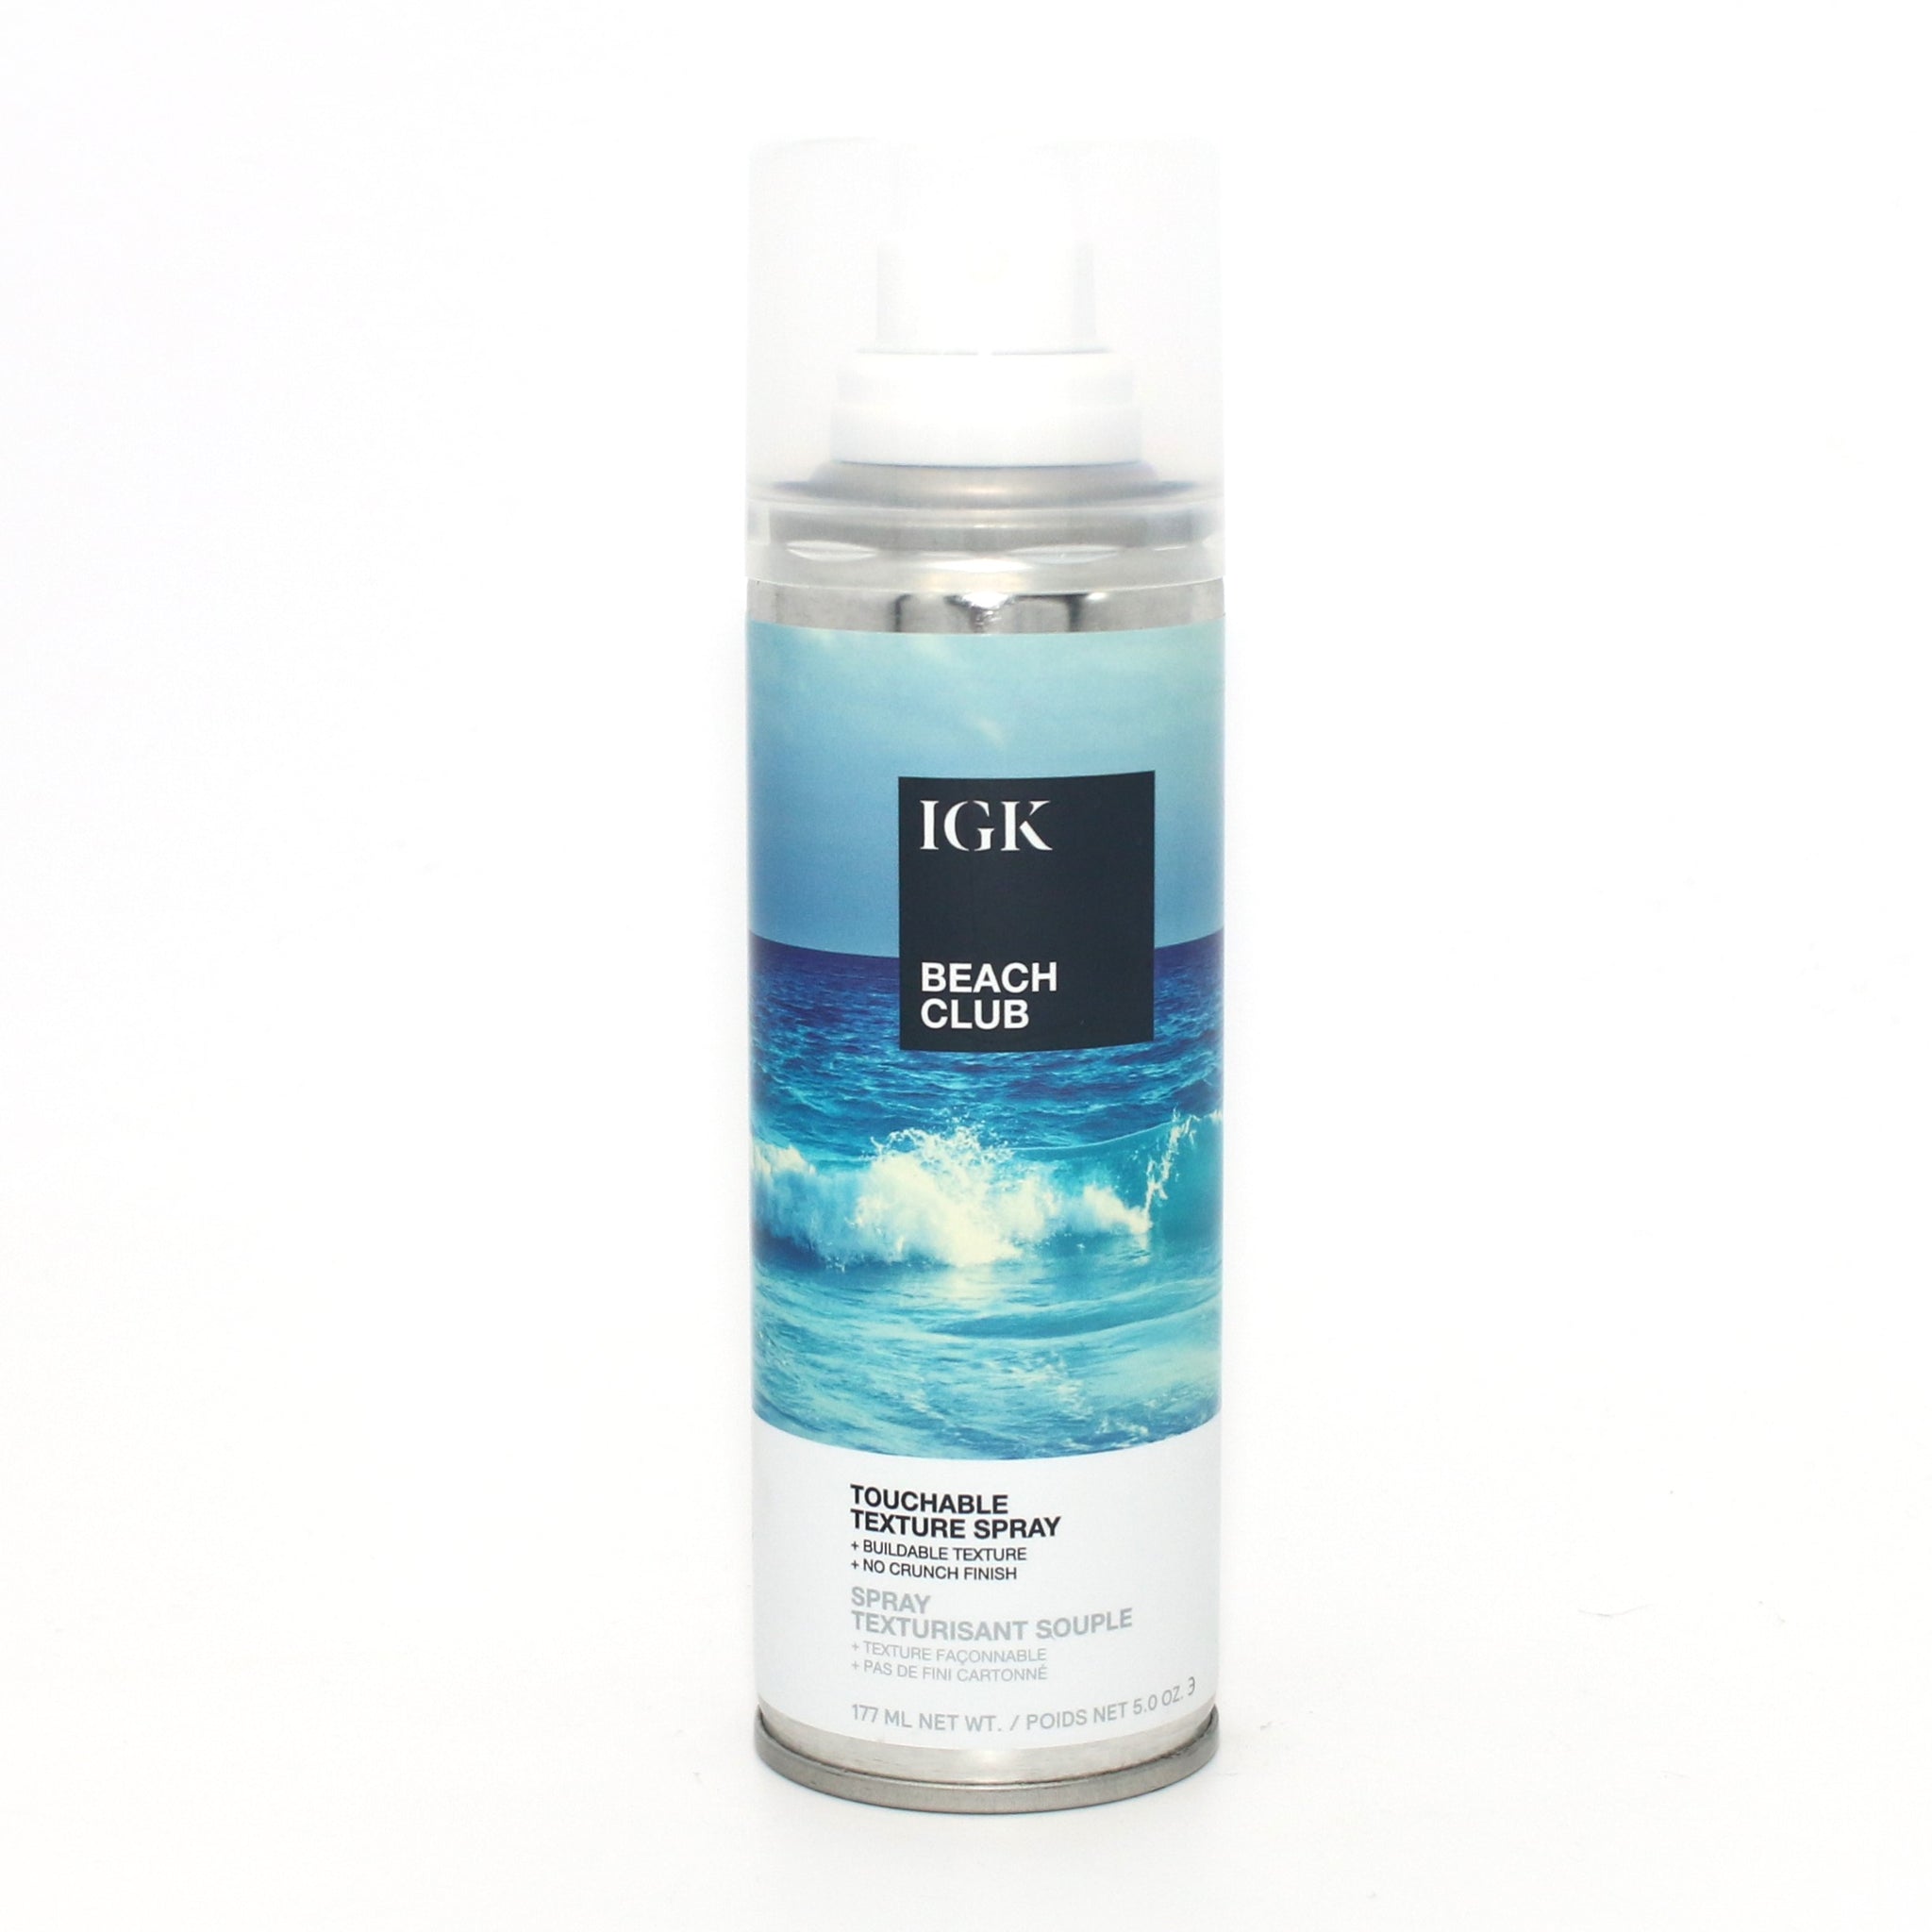 Igk Beach Club Touchable Texture Spray 5 oz